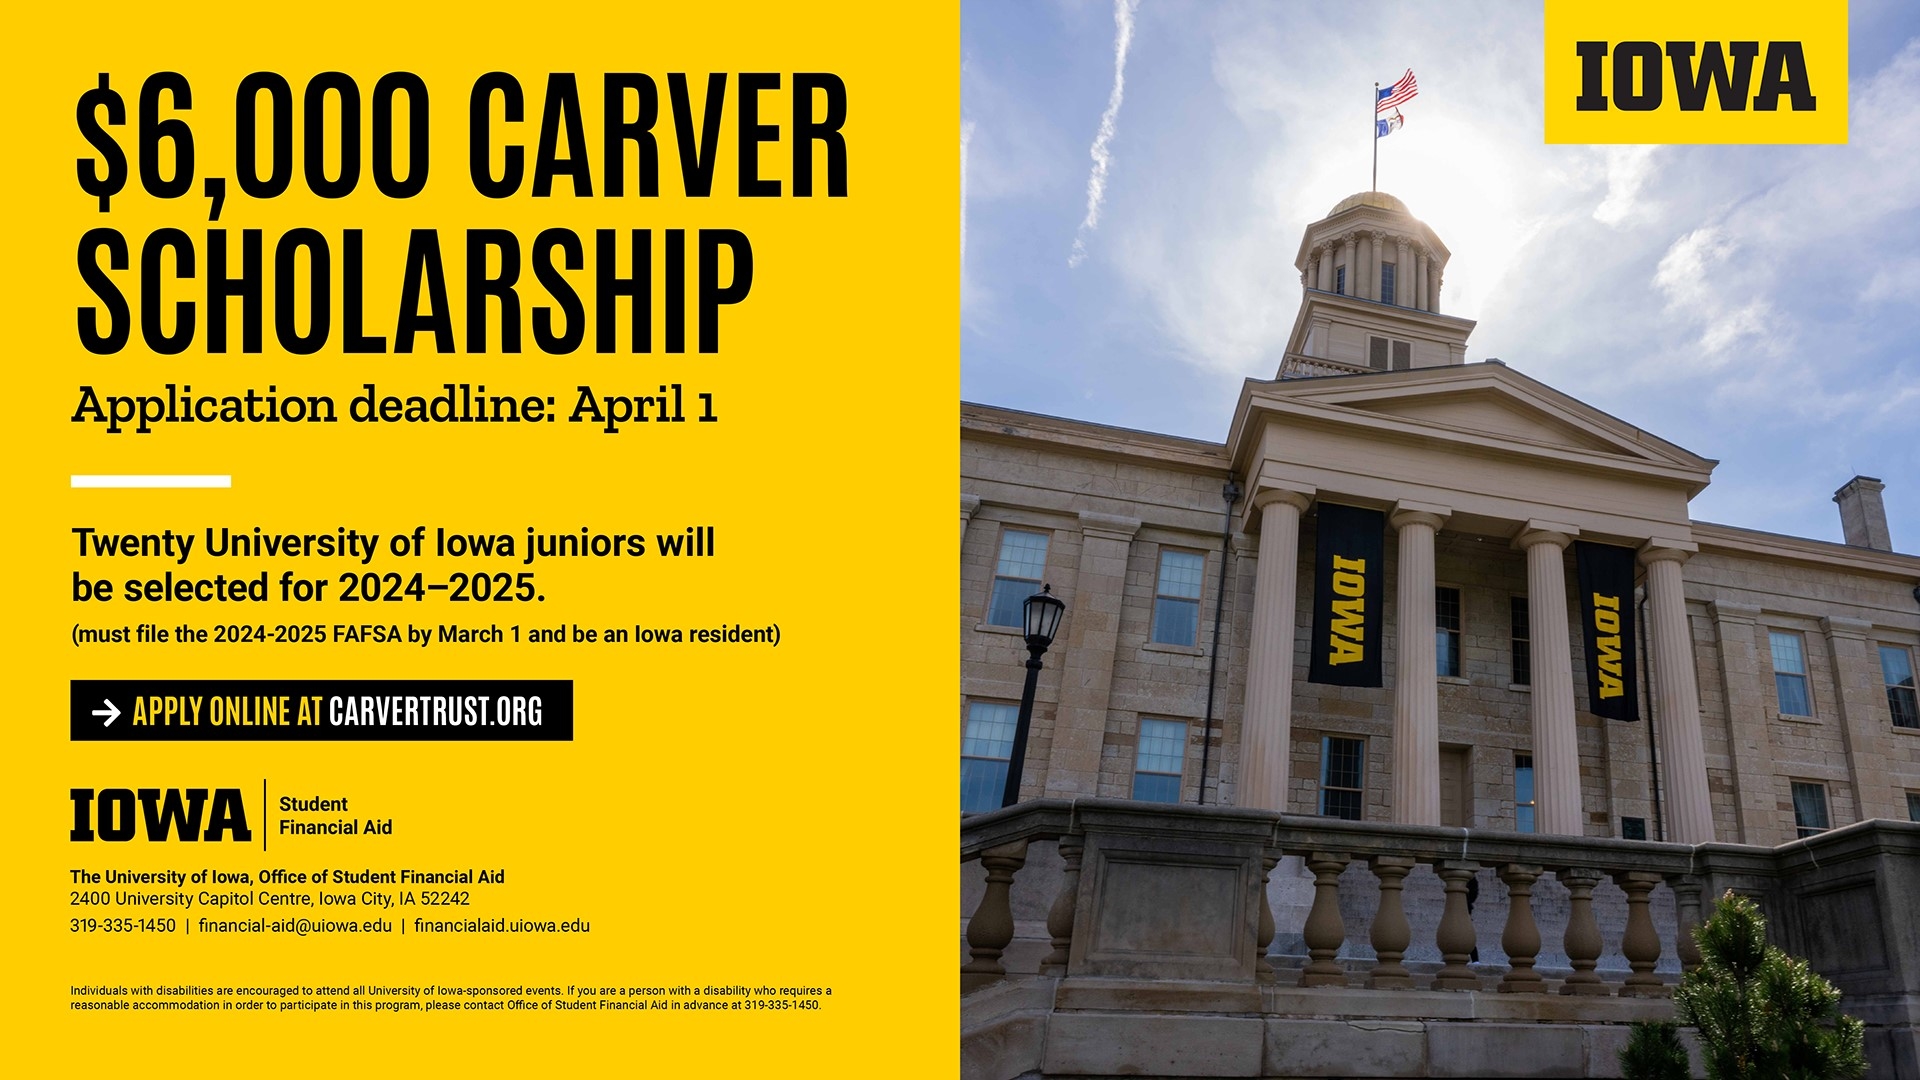 $6,000 Carver Scholarship application deadline is April 1. Learn more at carvertrust.org.